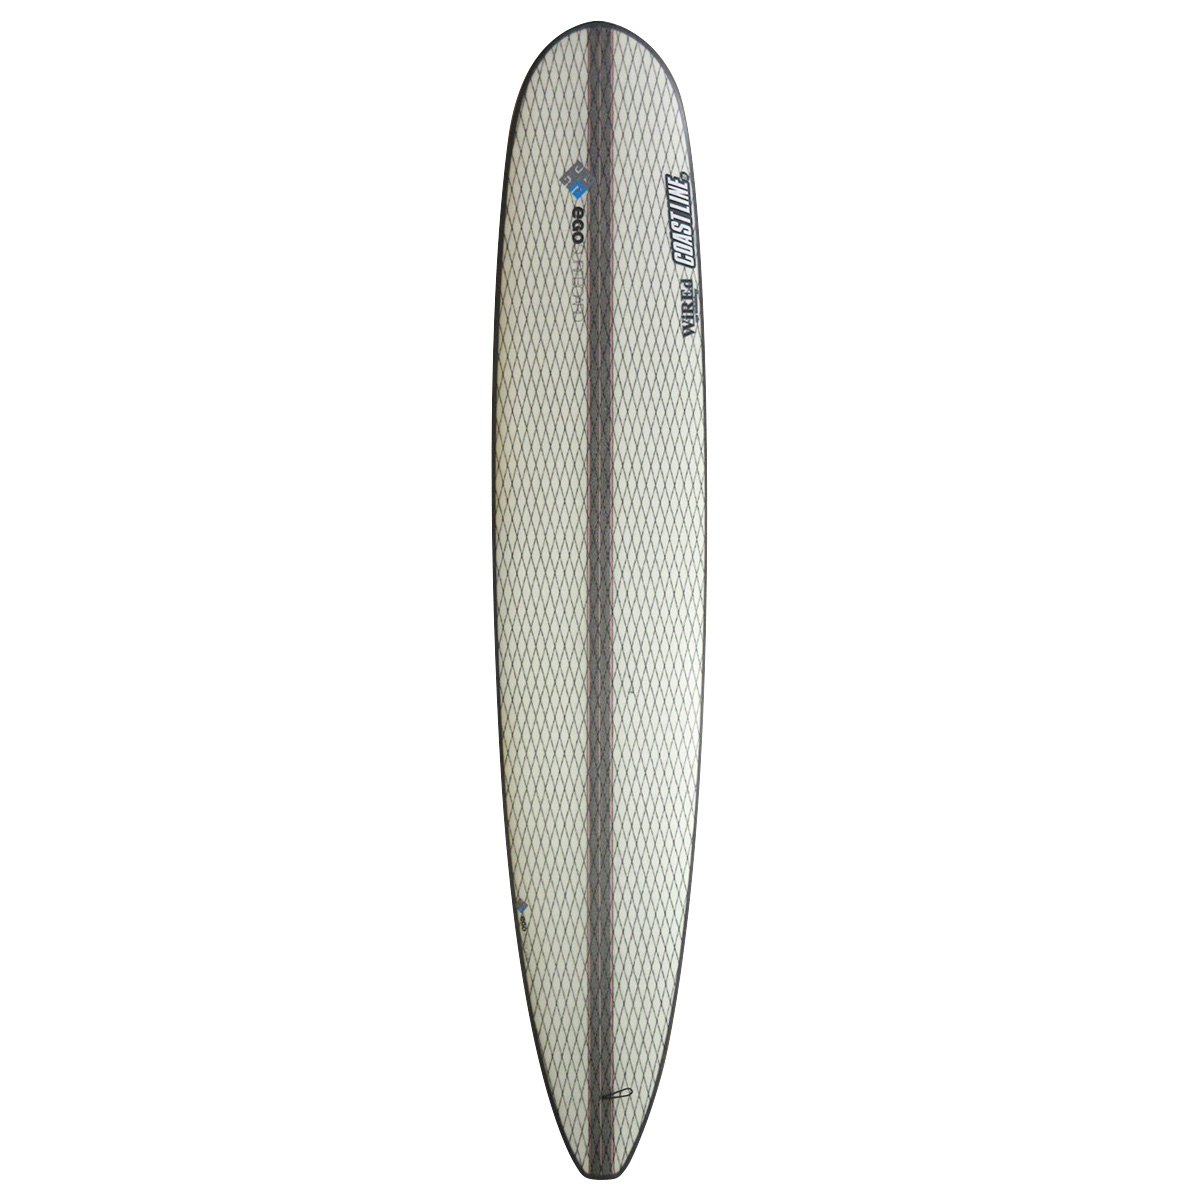 EGO SURFBOARDS  / All Round 10'0 Core Flex Wired